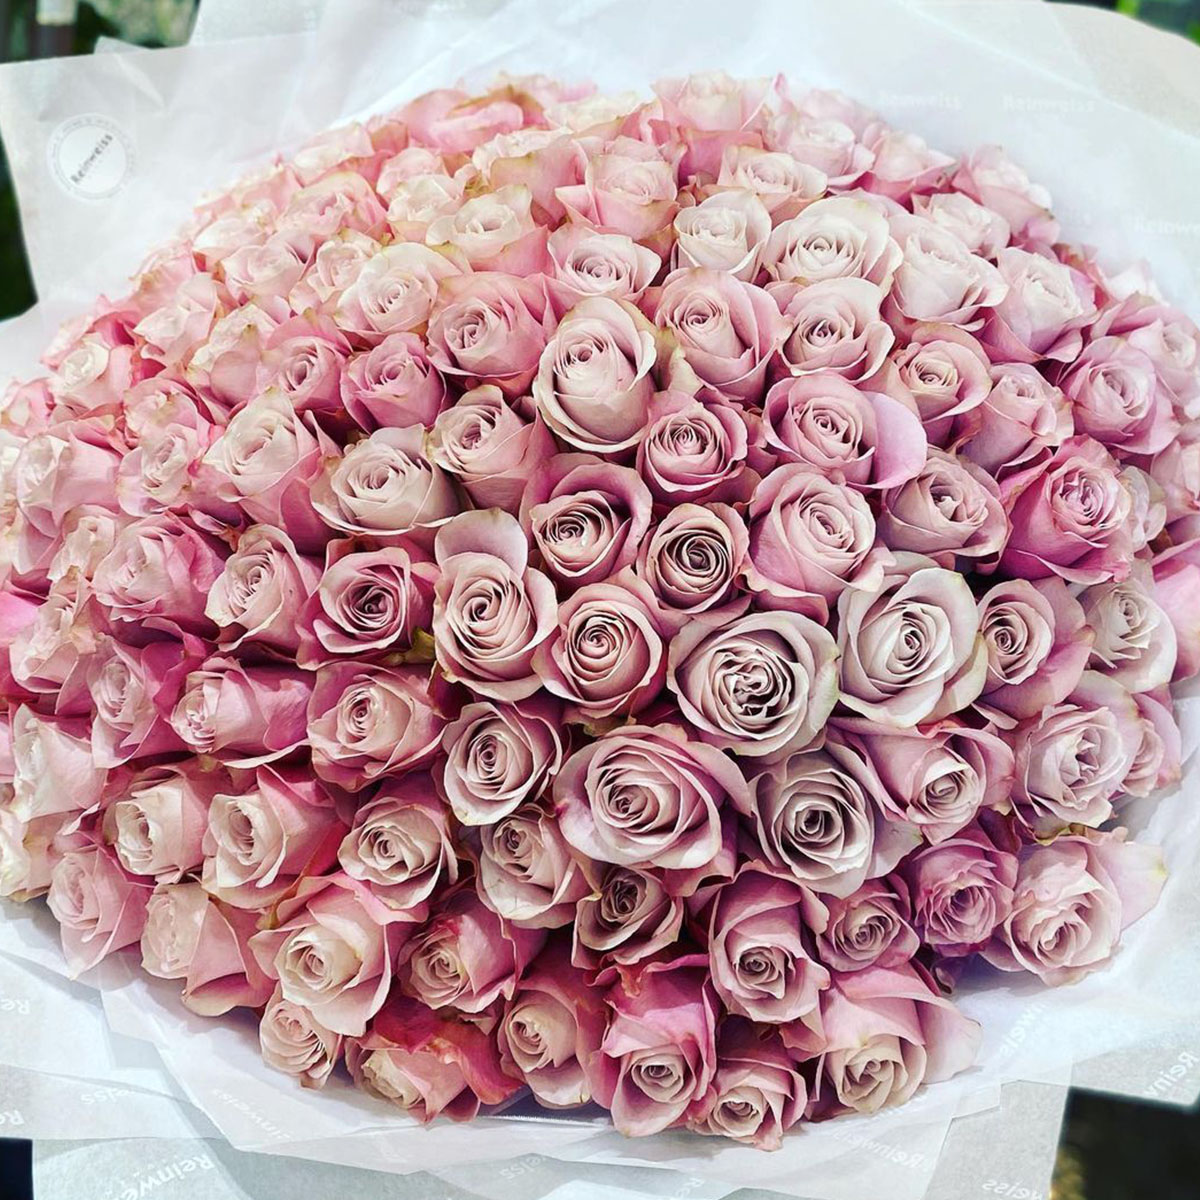 20 Flowers That Fit Into Your Genuine Pink Color Palette - Rose Secret Garden 1